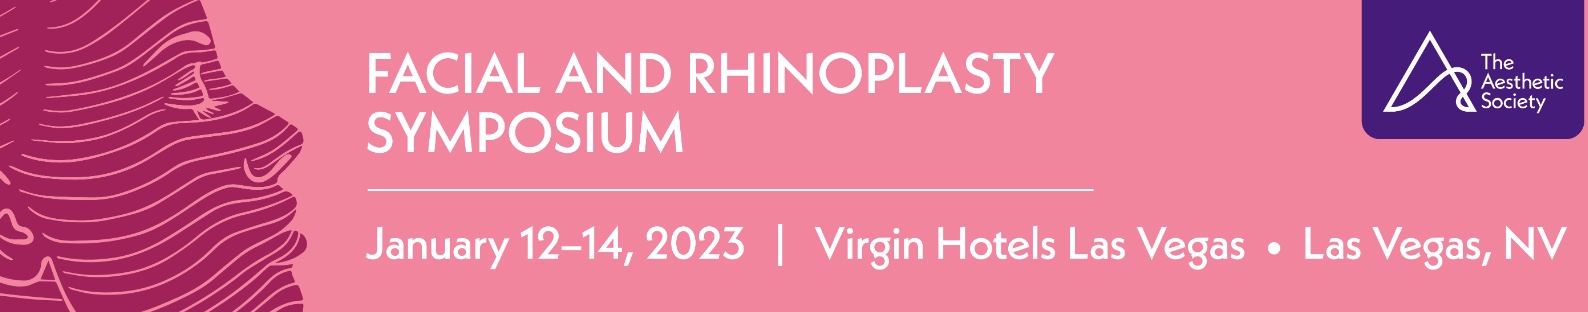 Facial and Rhinoplasty Symposium